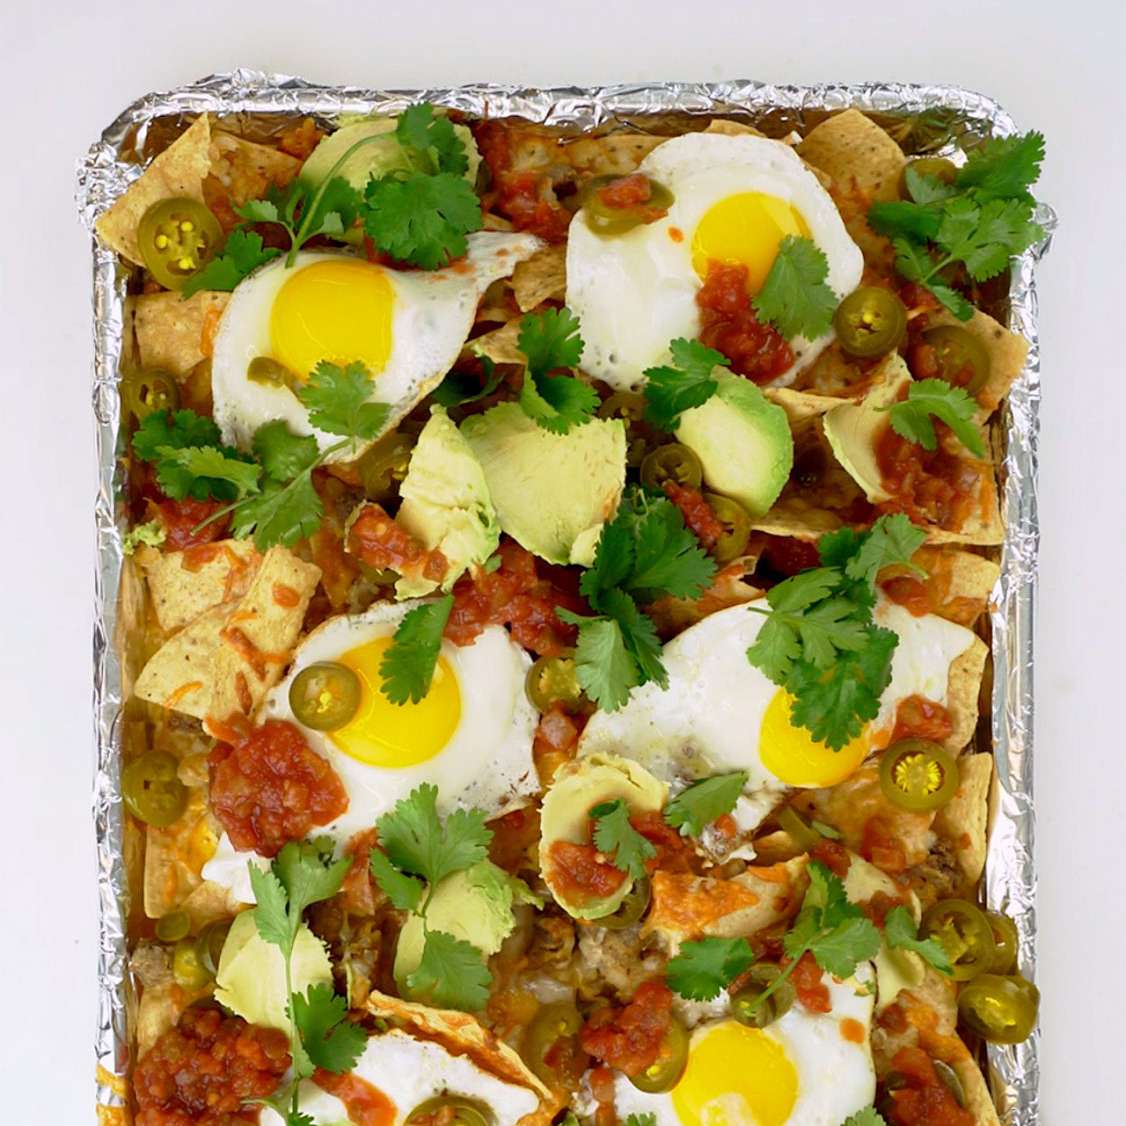 Homemade nachos recipes - Breakfast Nachos